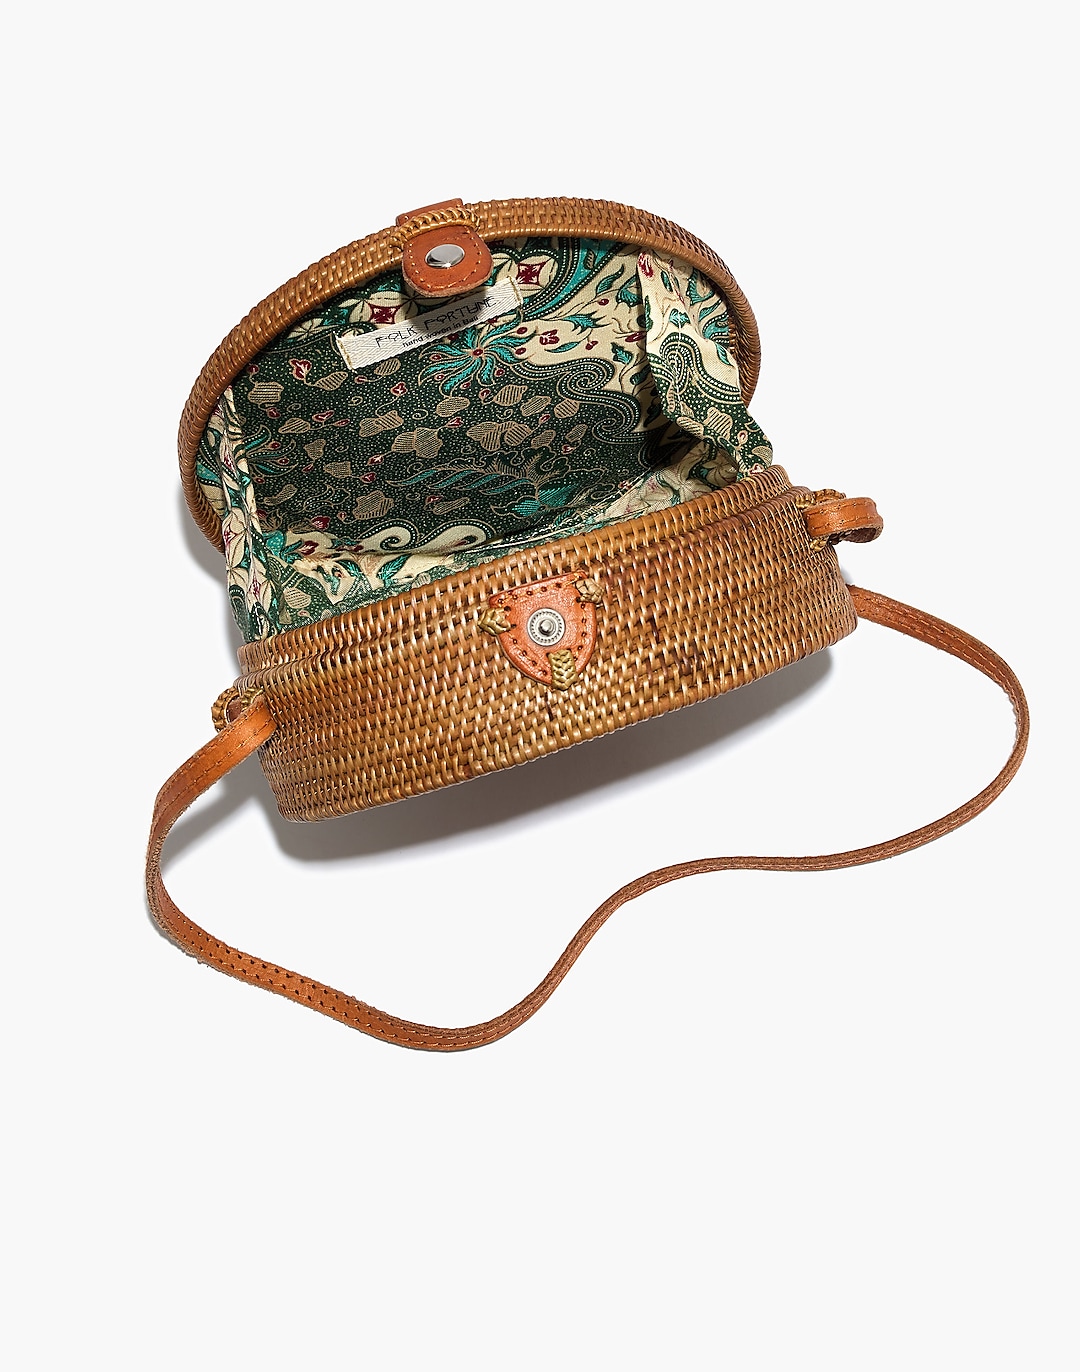 Rattan bag - Rattan Round Handbags - Bali Bags - Free Shipping